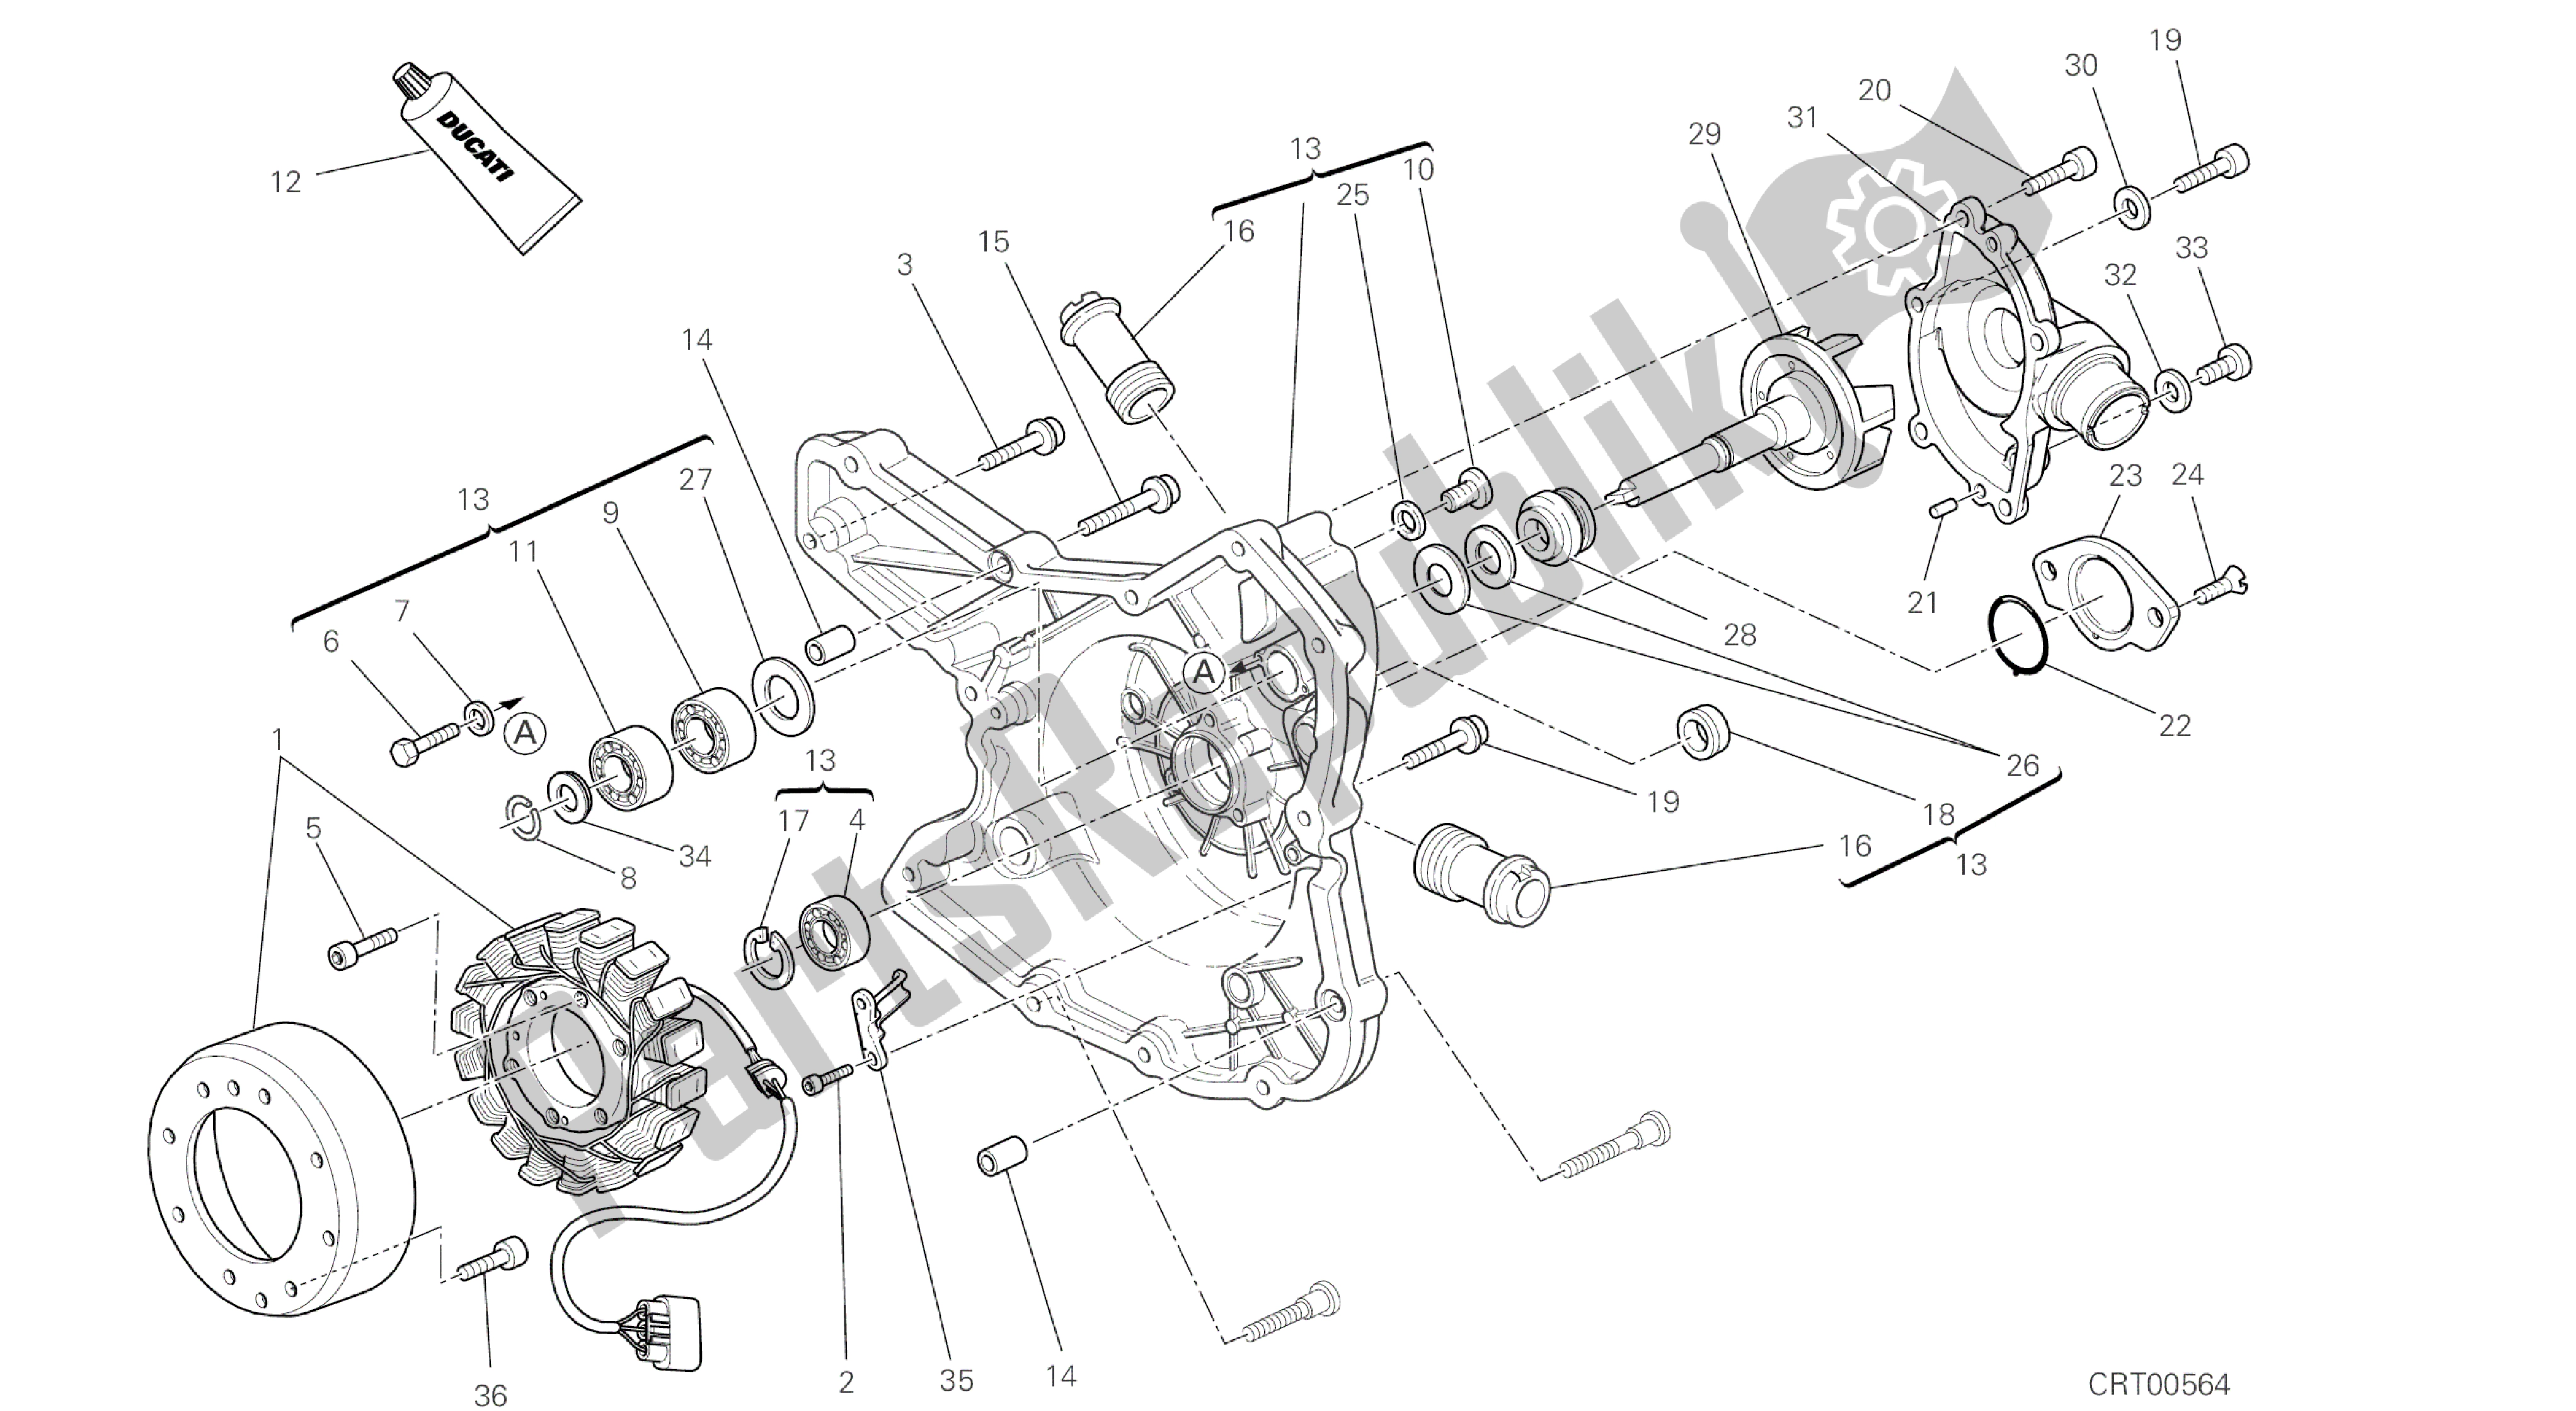 Alle onderdelen voor de Tekening 011 - Generatorafdekking [mod: Ms1200pp; Xst: Aus, Eur, Fra, Jap, Tha] Groep Engine van de Ducati Multistrada S Pikes Peak 1200 2014